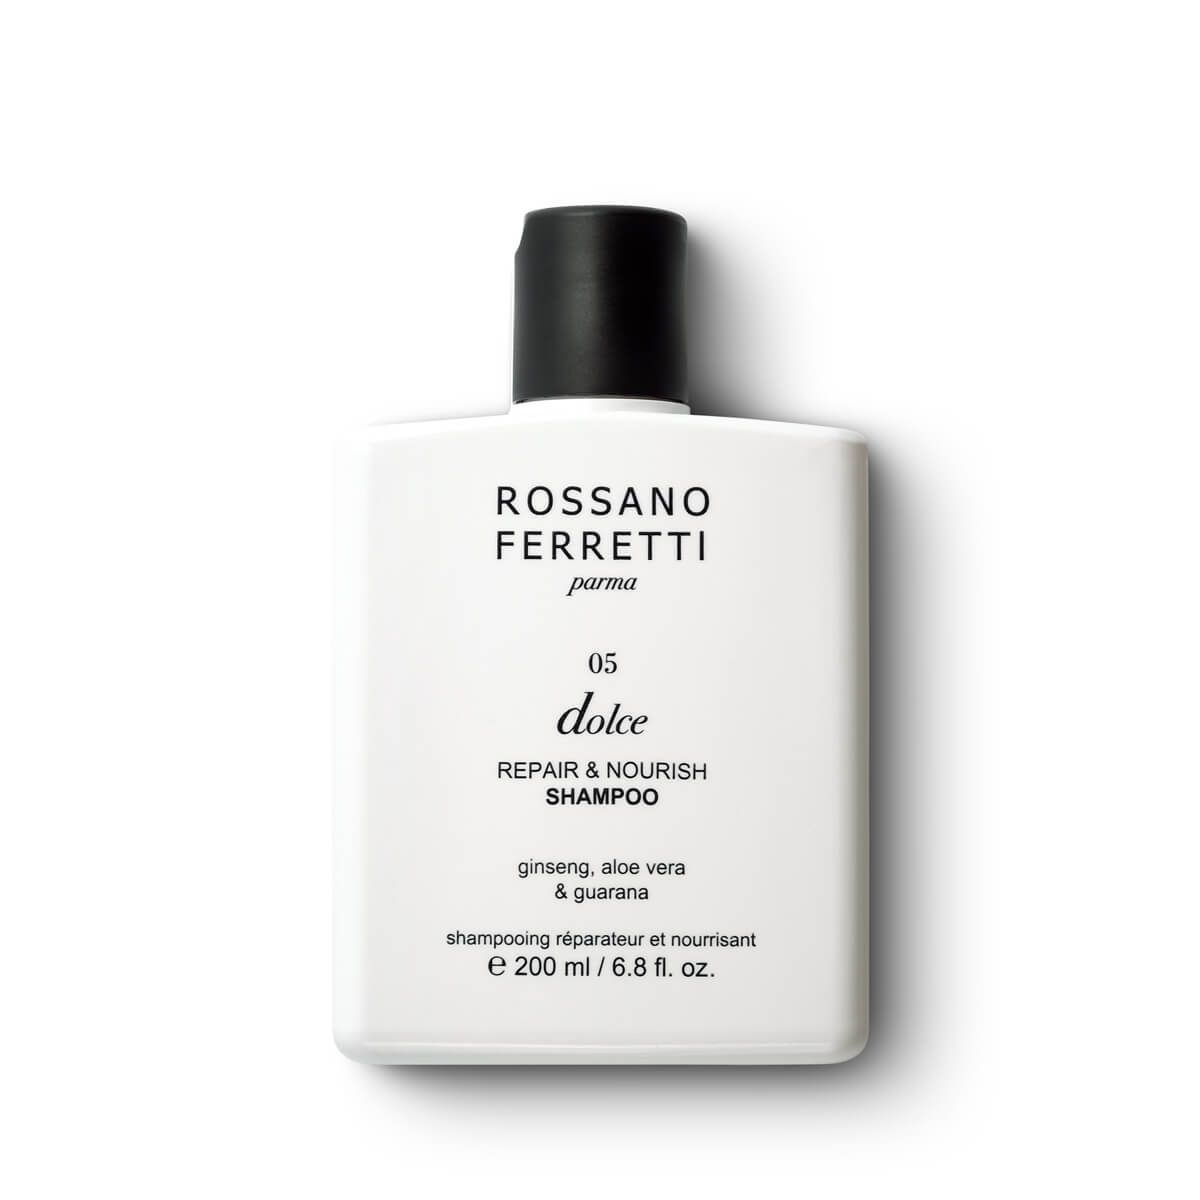 Rossano Ferretti Repair & Nourish Shampoo 200 ml / 6.8 fl. oz